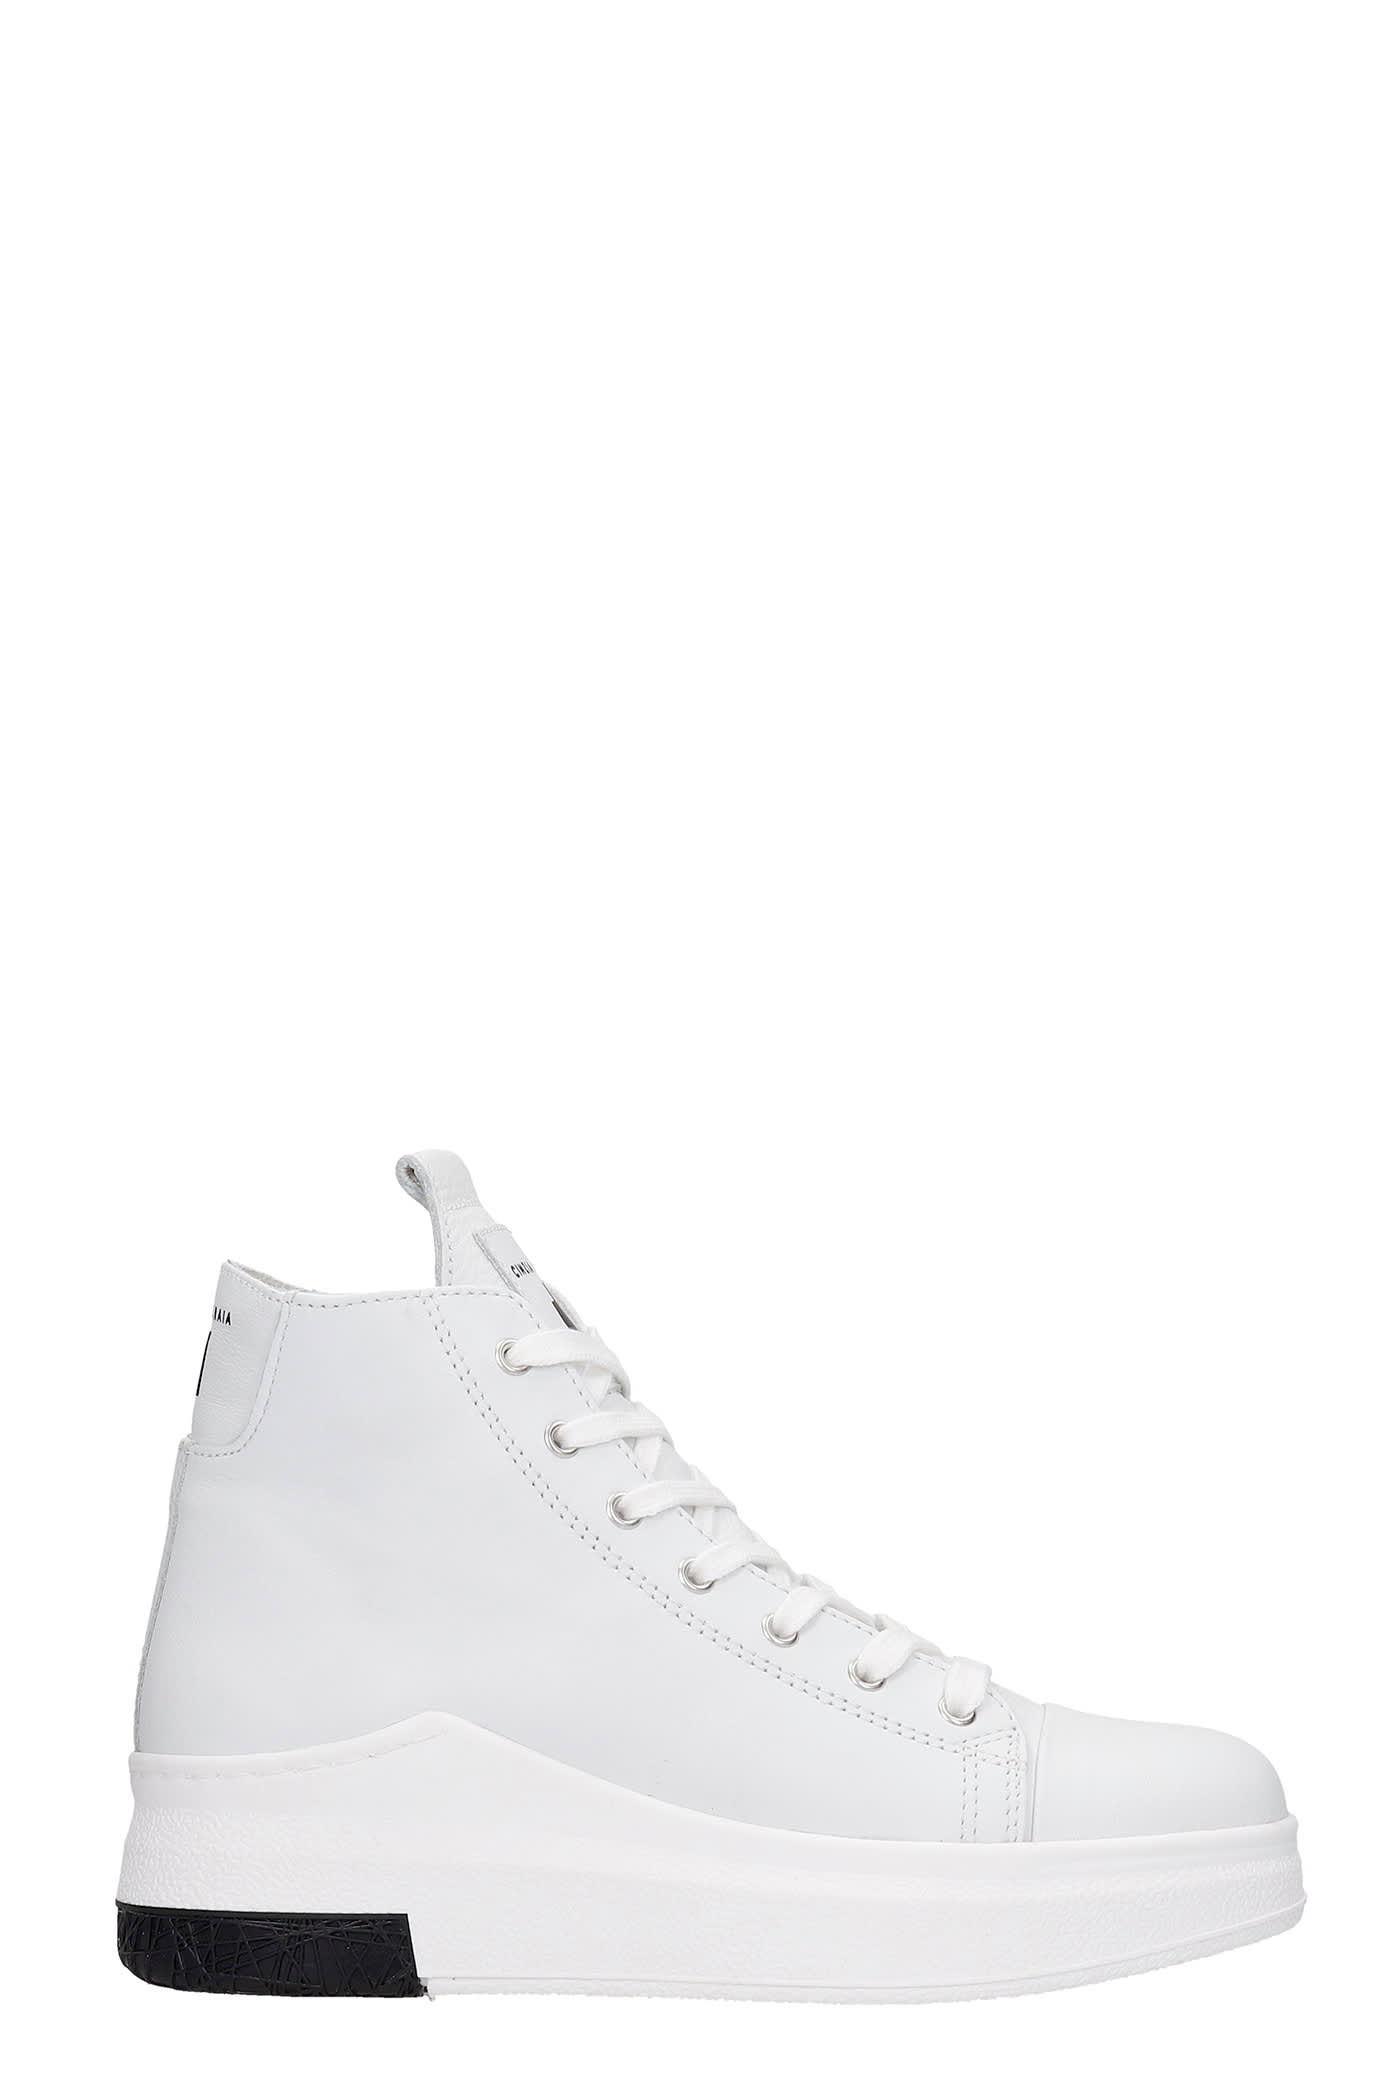 Cinzia Araia Sneakers In White Leather